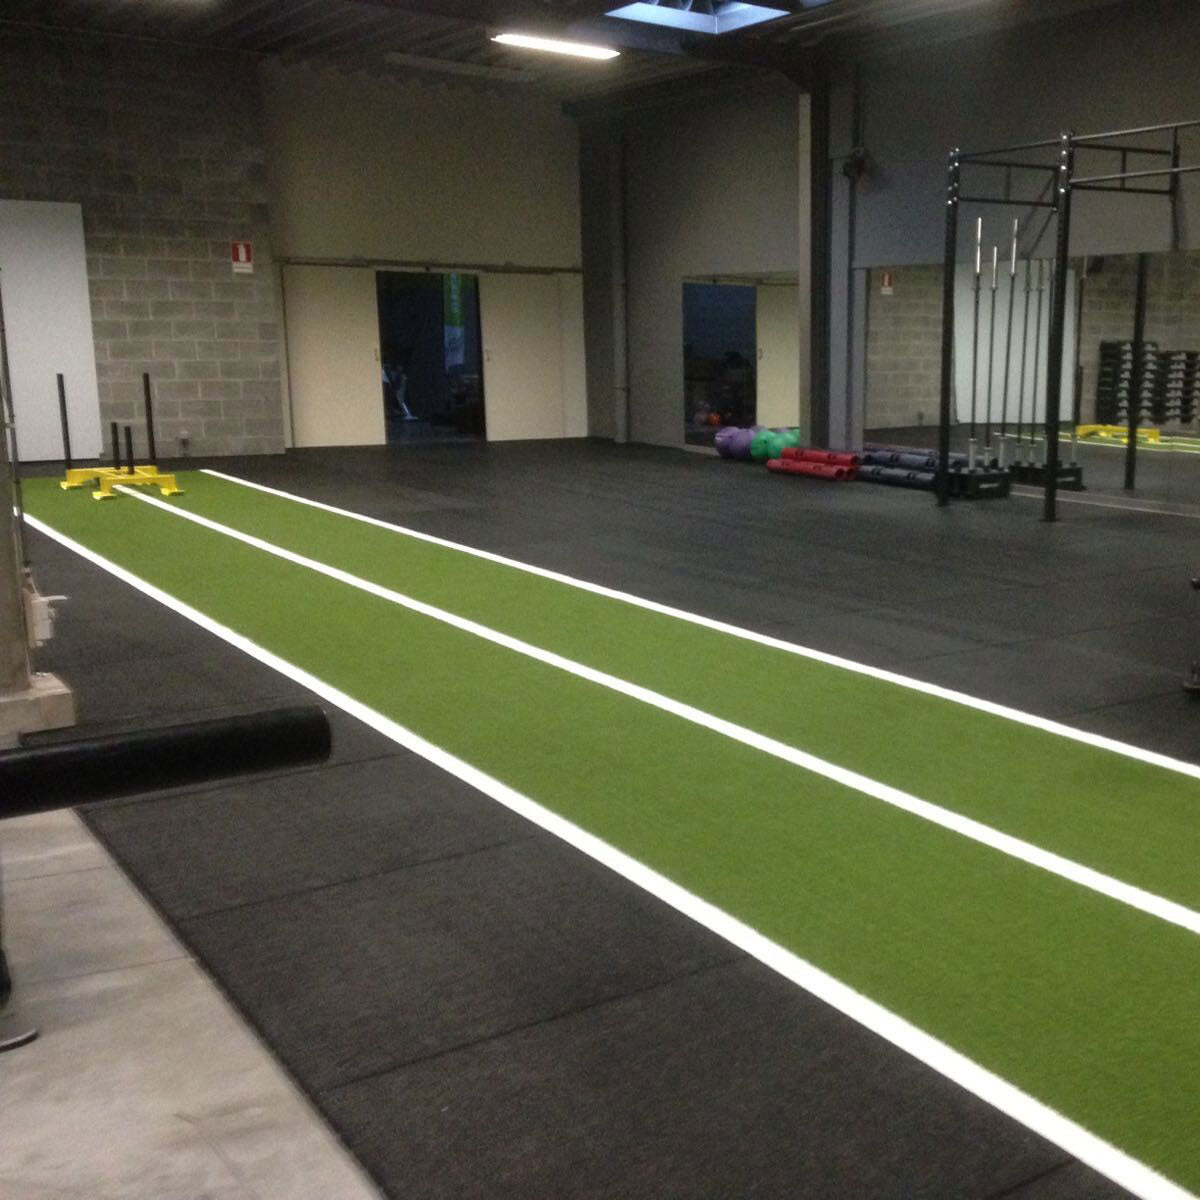 a green gym astroturf track in a gym